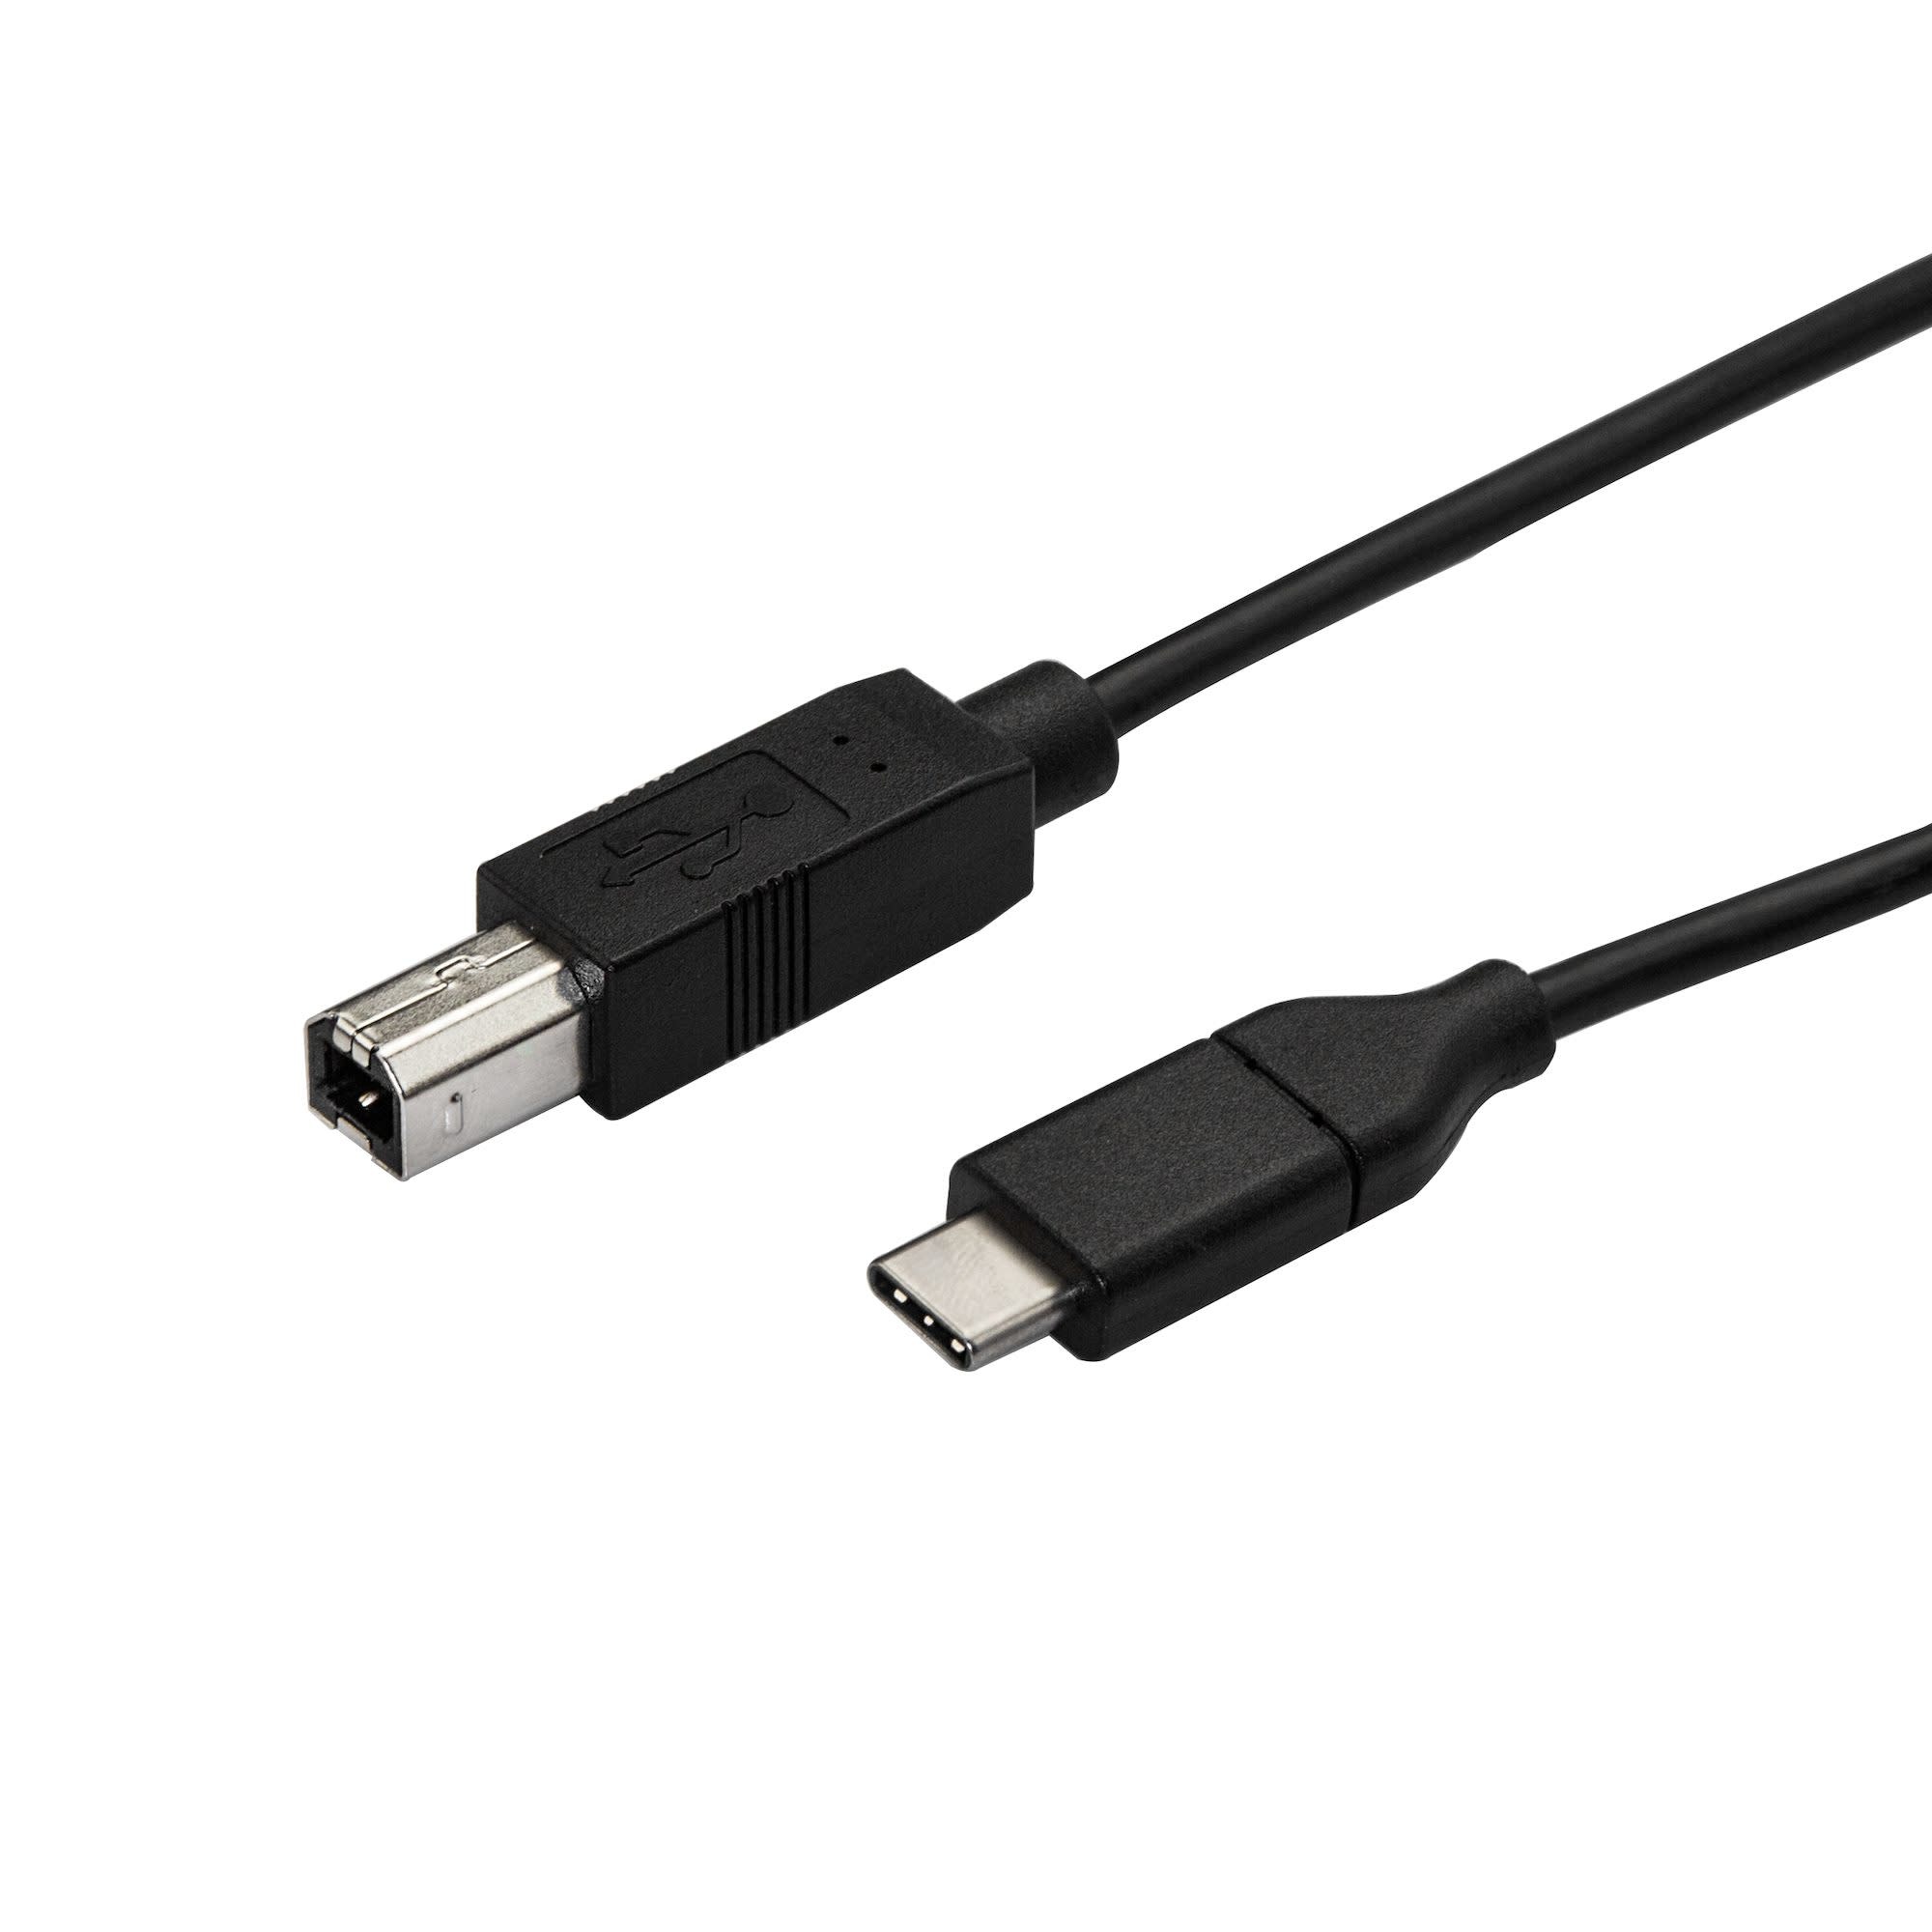 StarTech.com 0.5m USB C to USB B Printer Cable - M/M - 2.0 - USB C USB B Cable - USB C Printer Cable USB Type C to Type